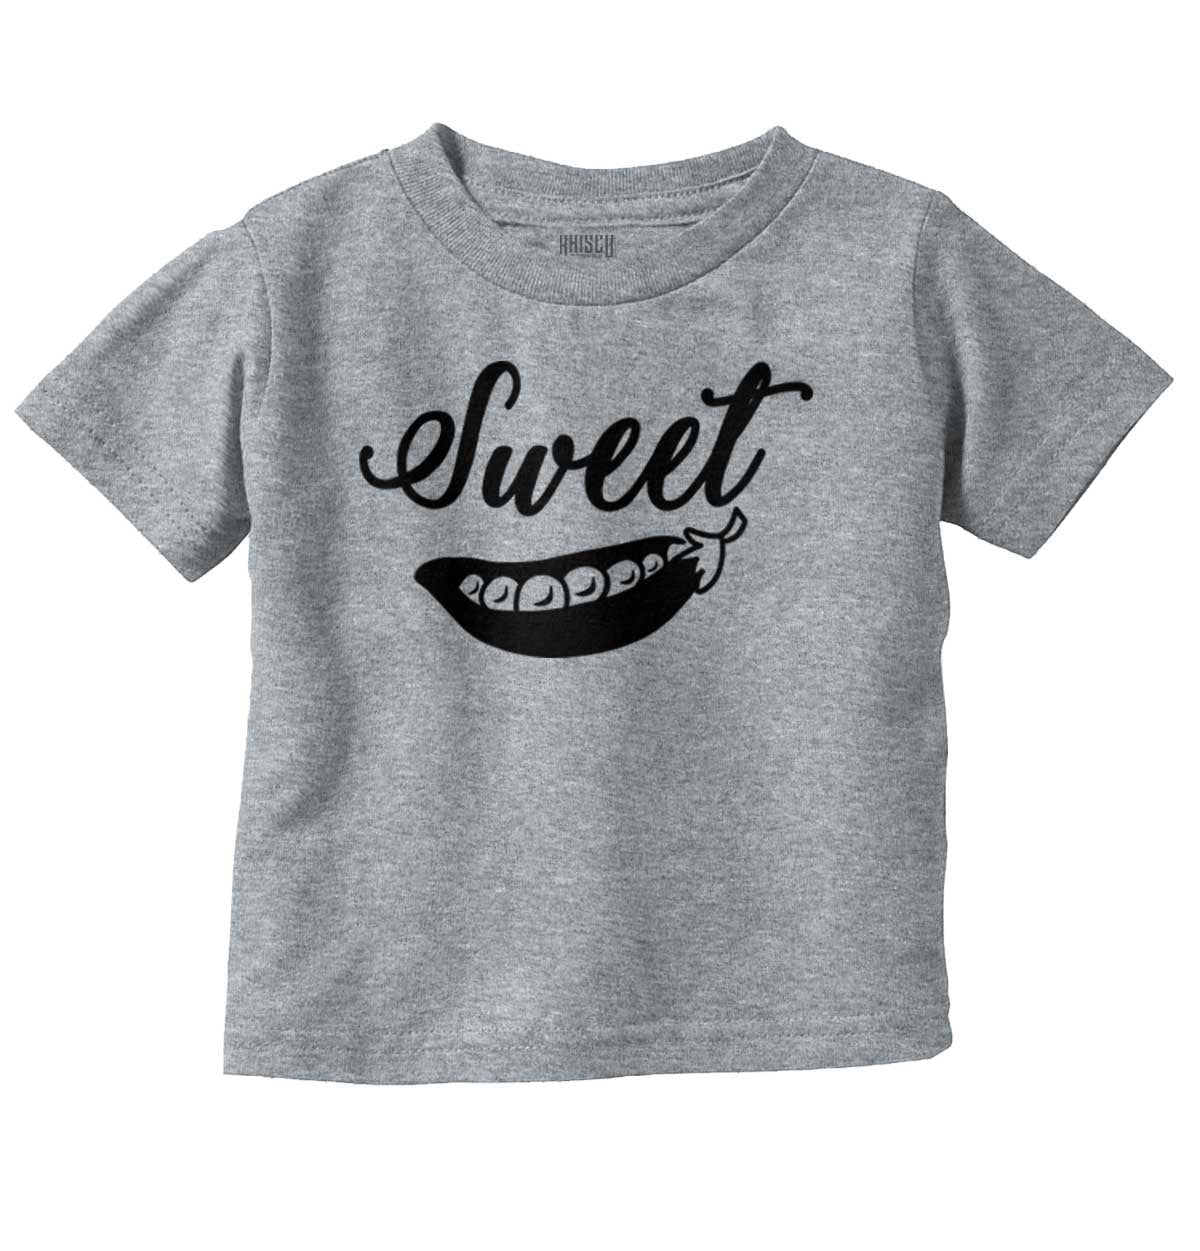 CafePress - Peas On Earth T Shirt - Cute Toddler T-Shirt, 100